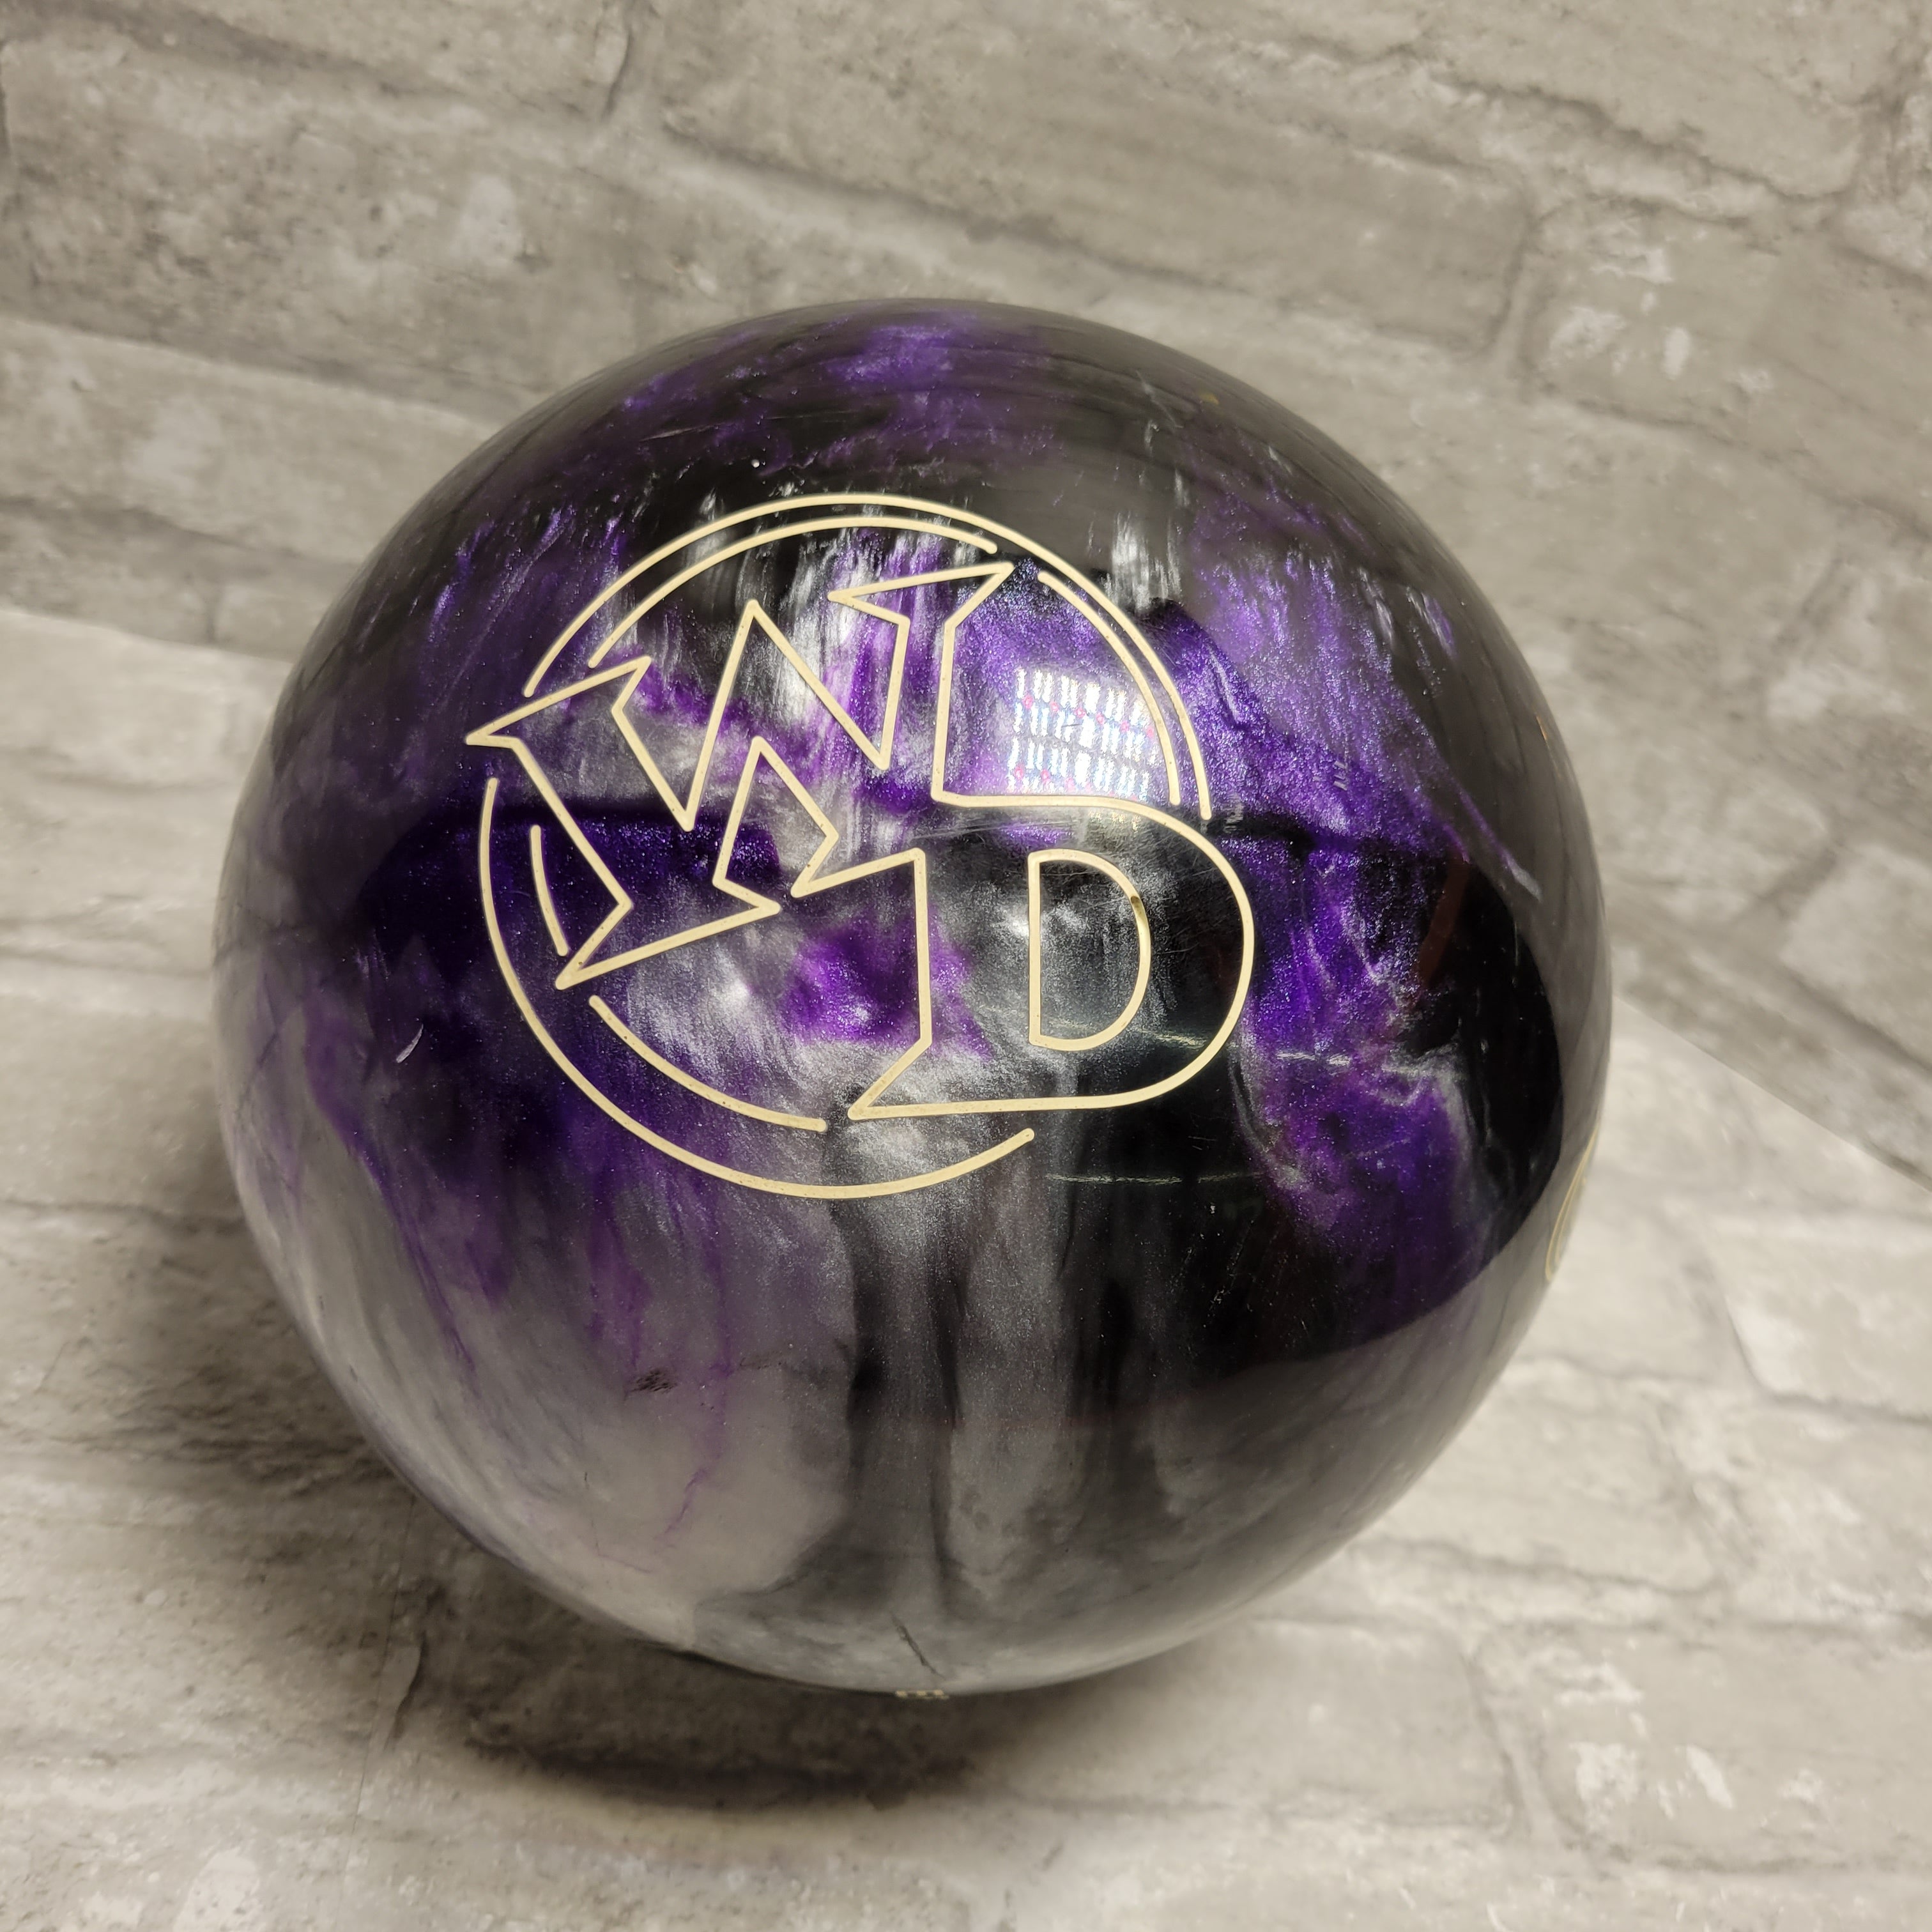 Columbia 300 White Dot Black Purple Silver Bowling Ball, 15lb 15oz, Not Drilled (8044862898414)